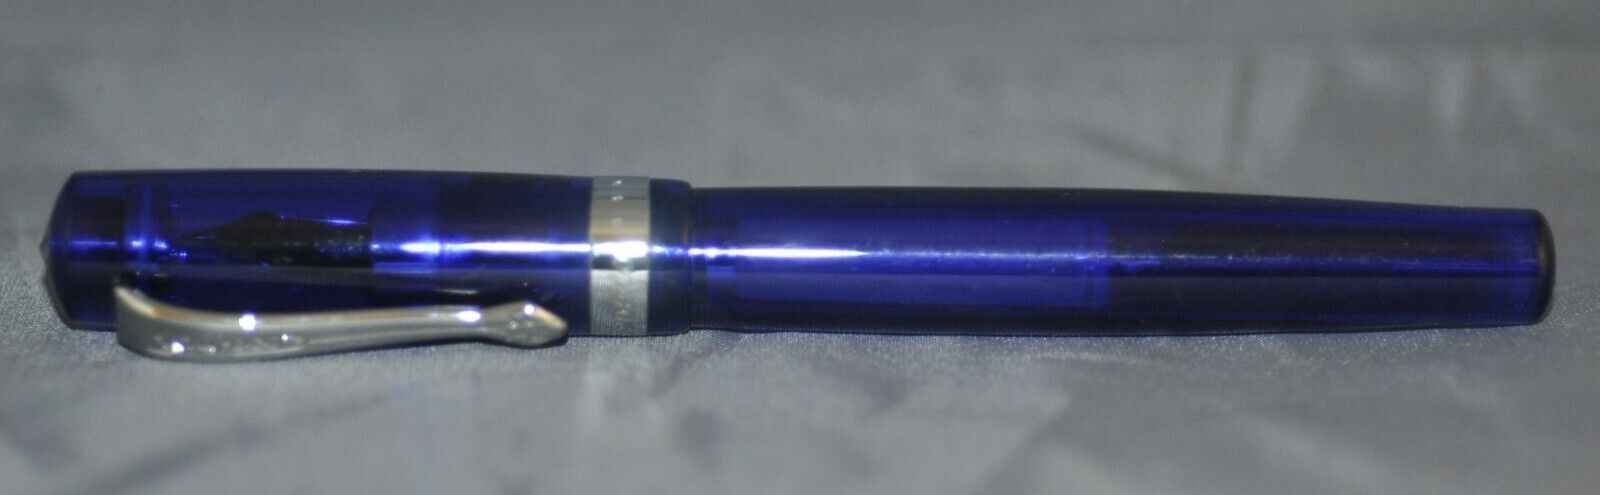 Kaweco Student Blue Translucent Extra Fine Nib Fountain Pen 10000465